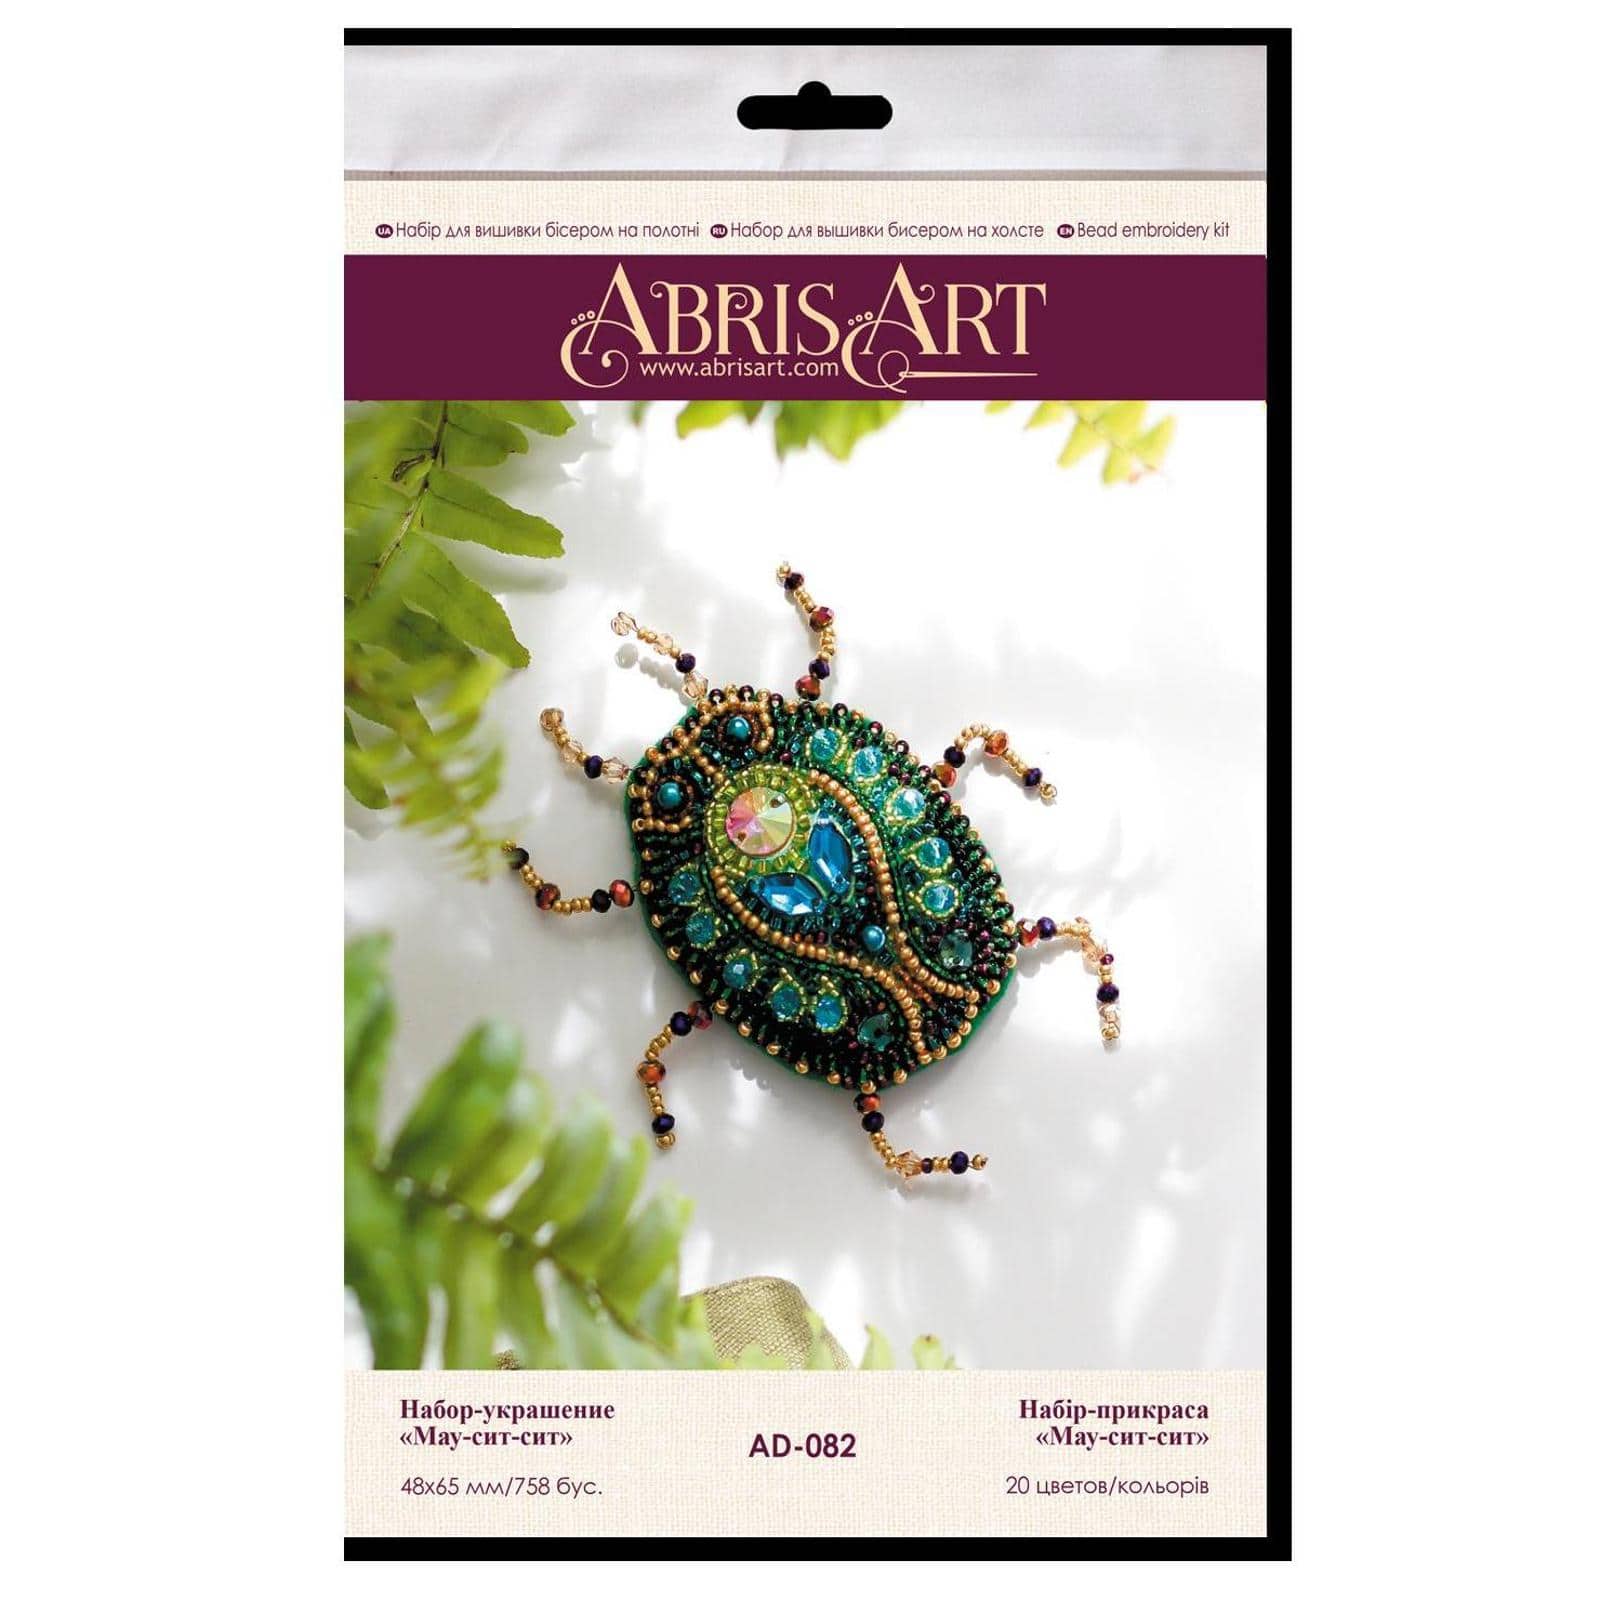 Abris Art Mau-Sit-Sit Bead Embroidery Decoration Kit